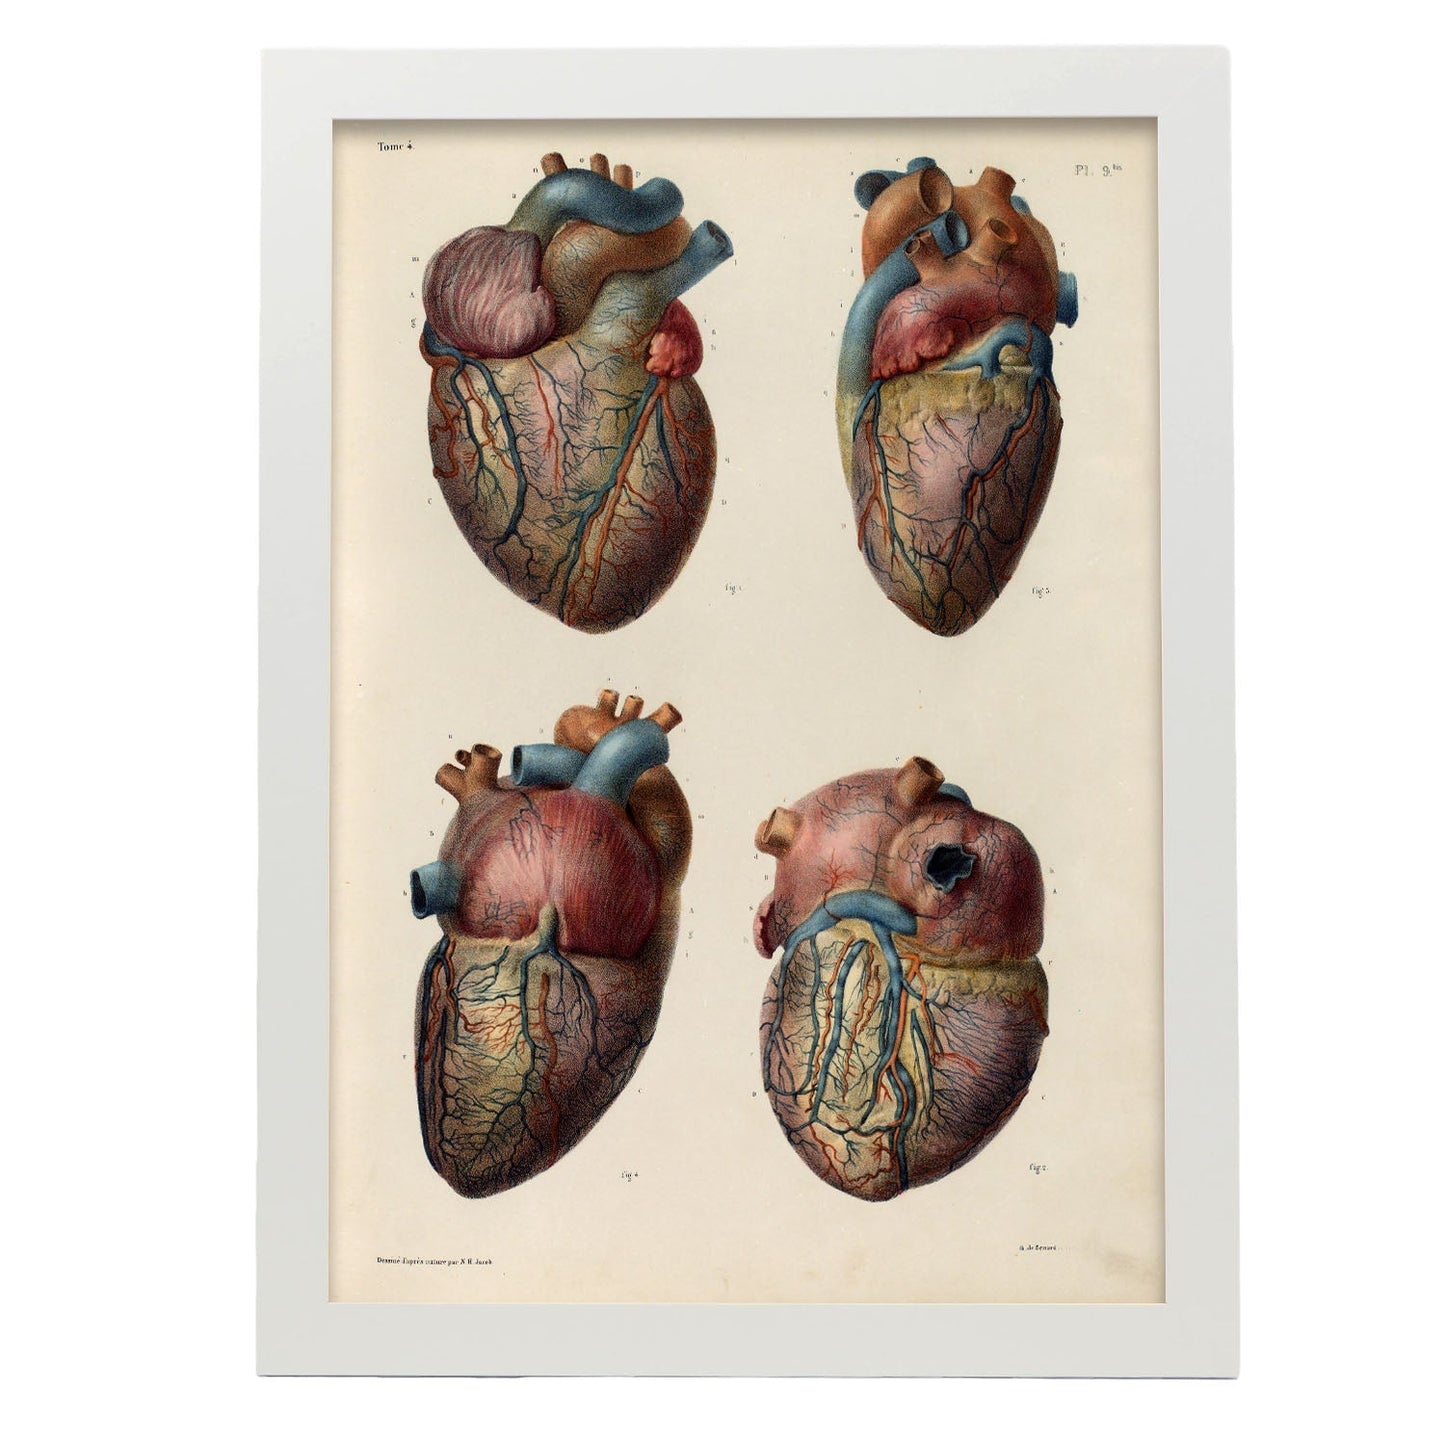 Heart and coronary arteries and veins-Artwork-Nacnic-A3-Marco Blanco-Nacnic Estudio SL